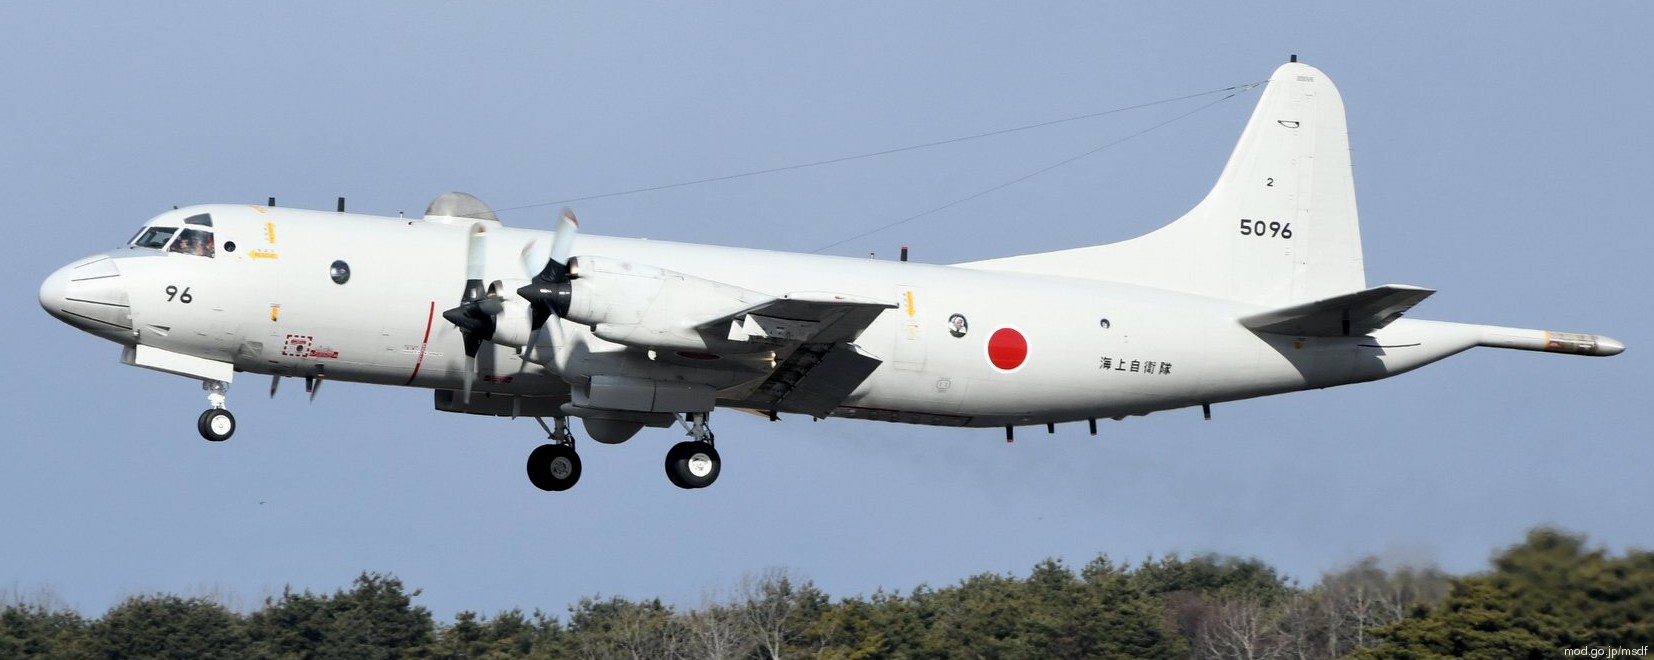 kawasaki p-3c orion patrol aircraft mpa japan maritime self defense force jmsdf 5096 04